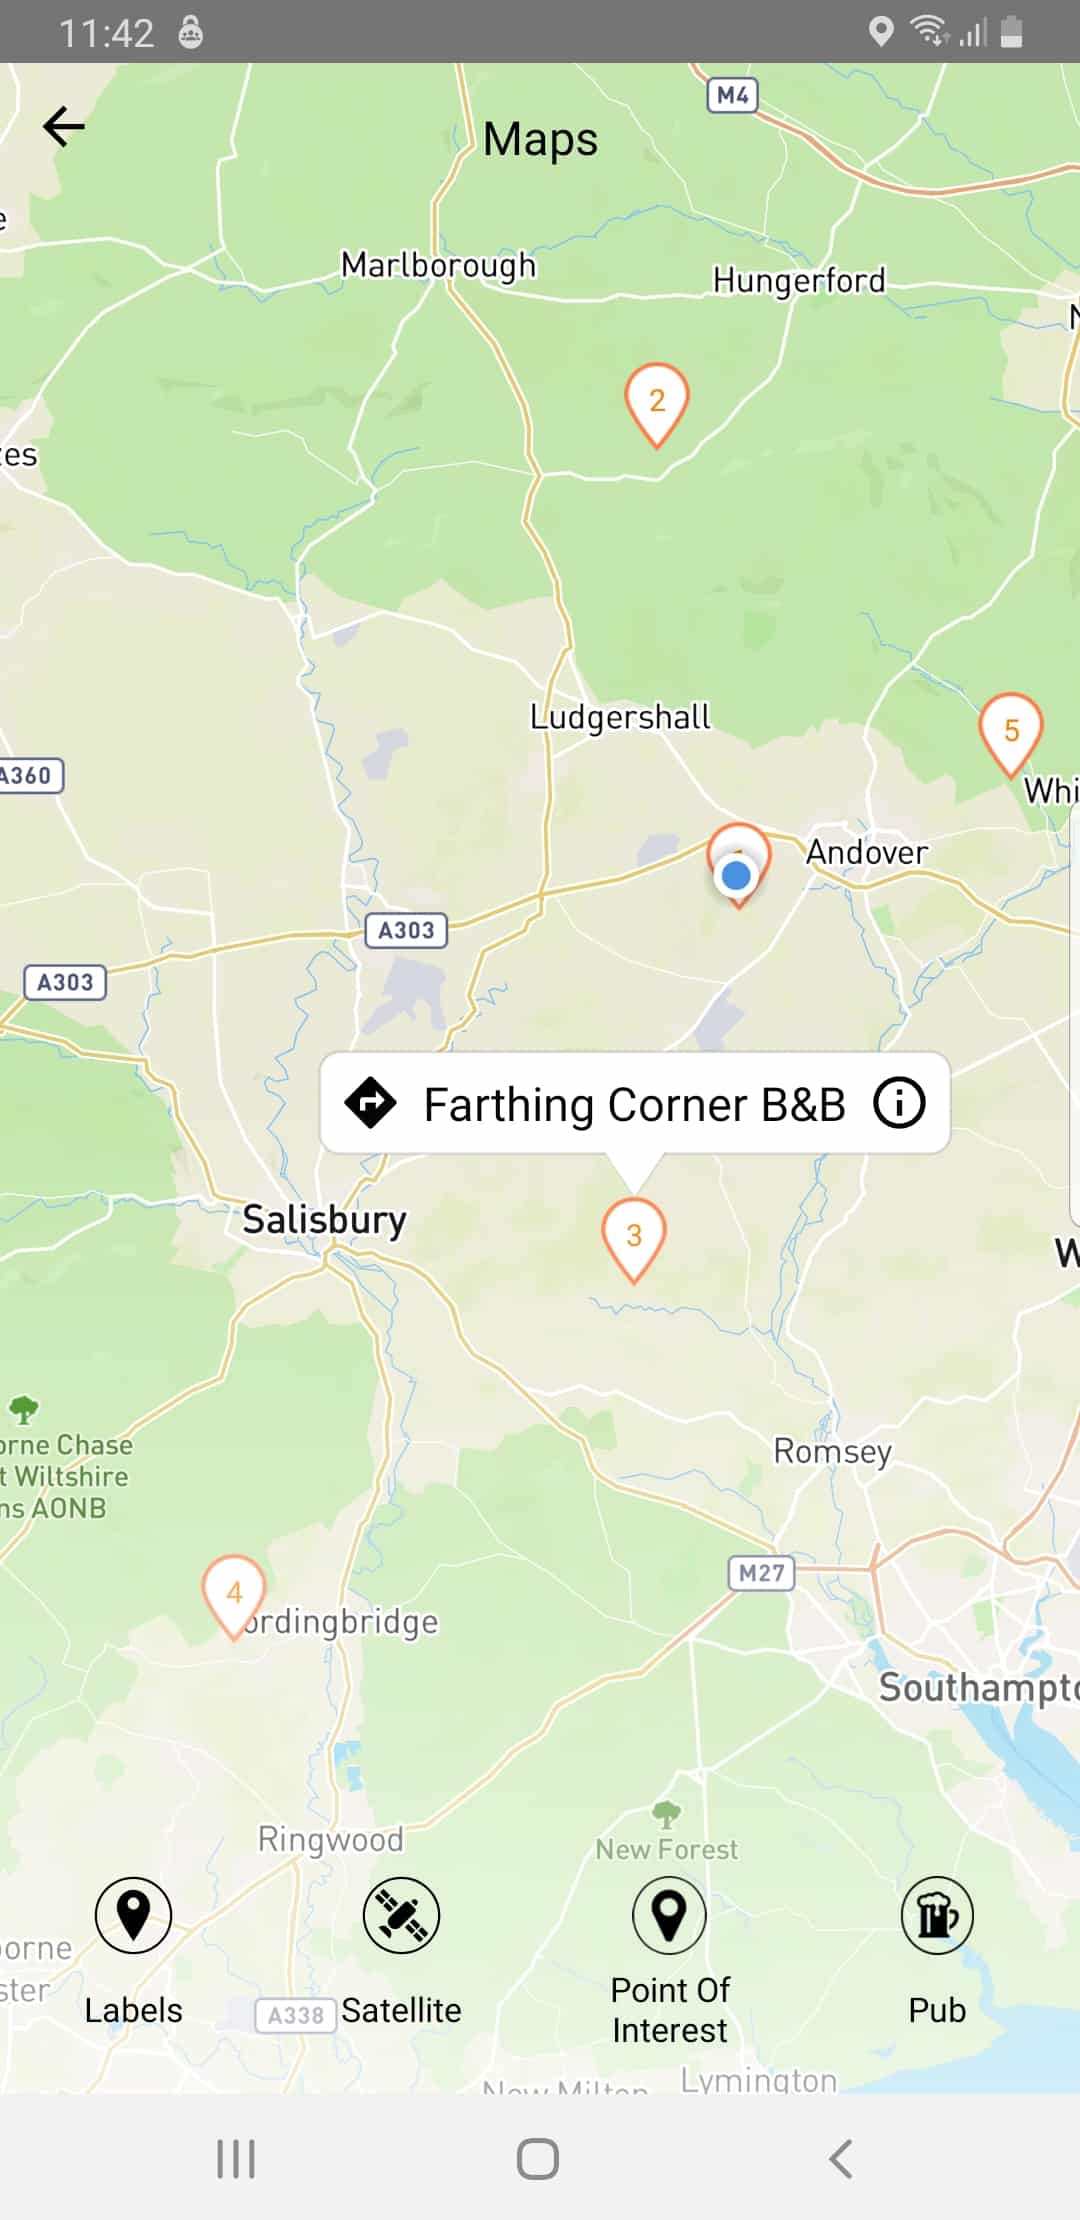 Farthing Corner B&B location